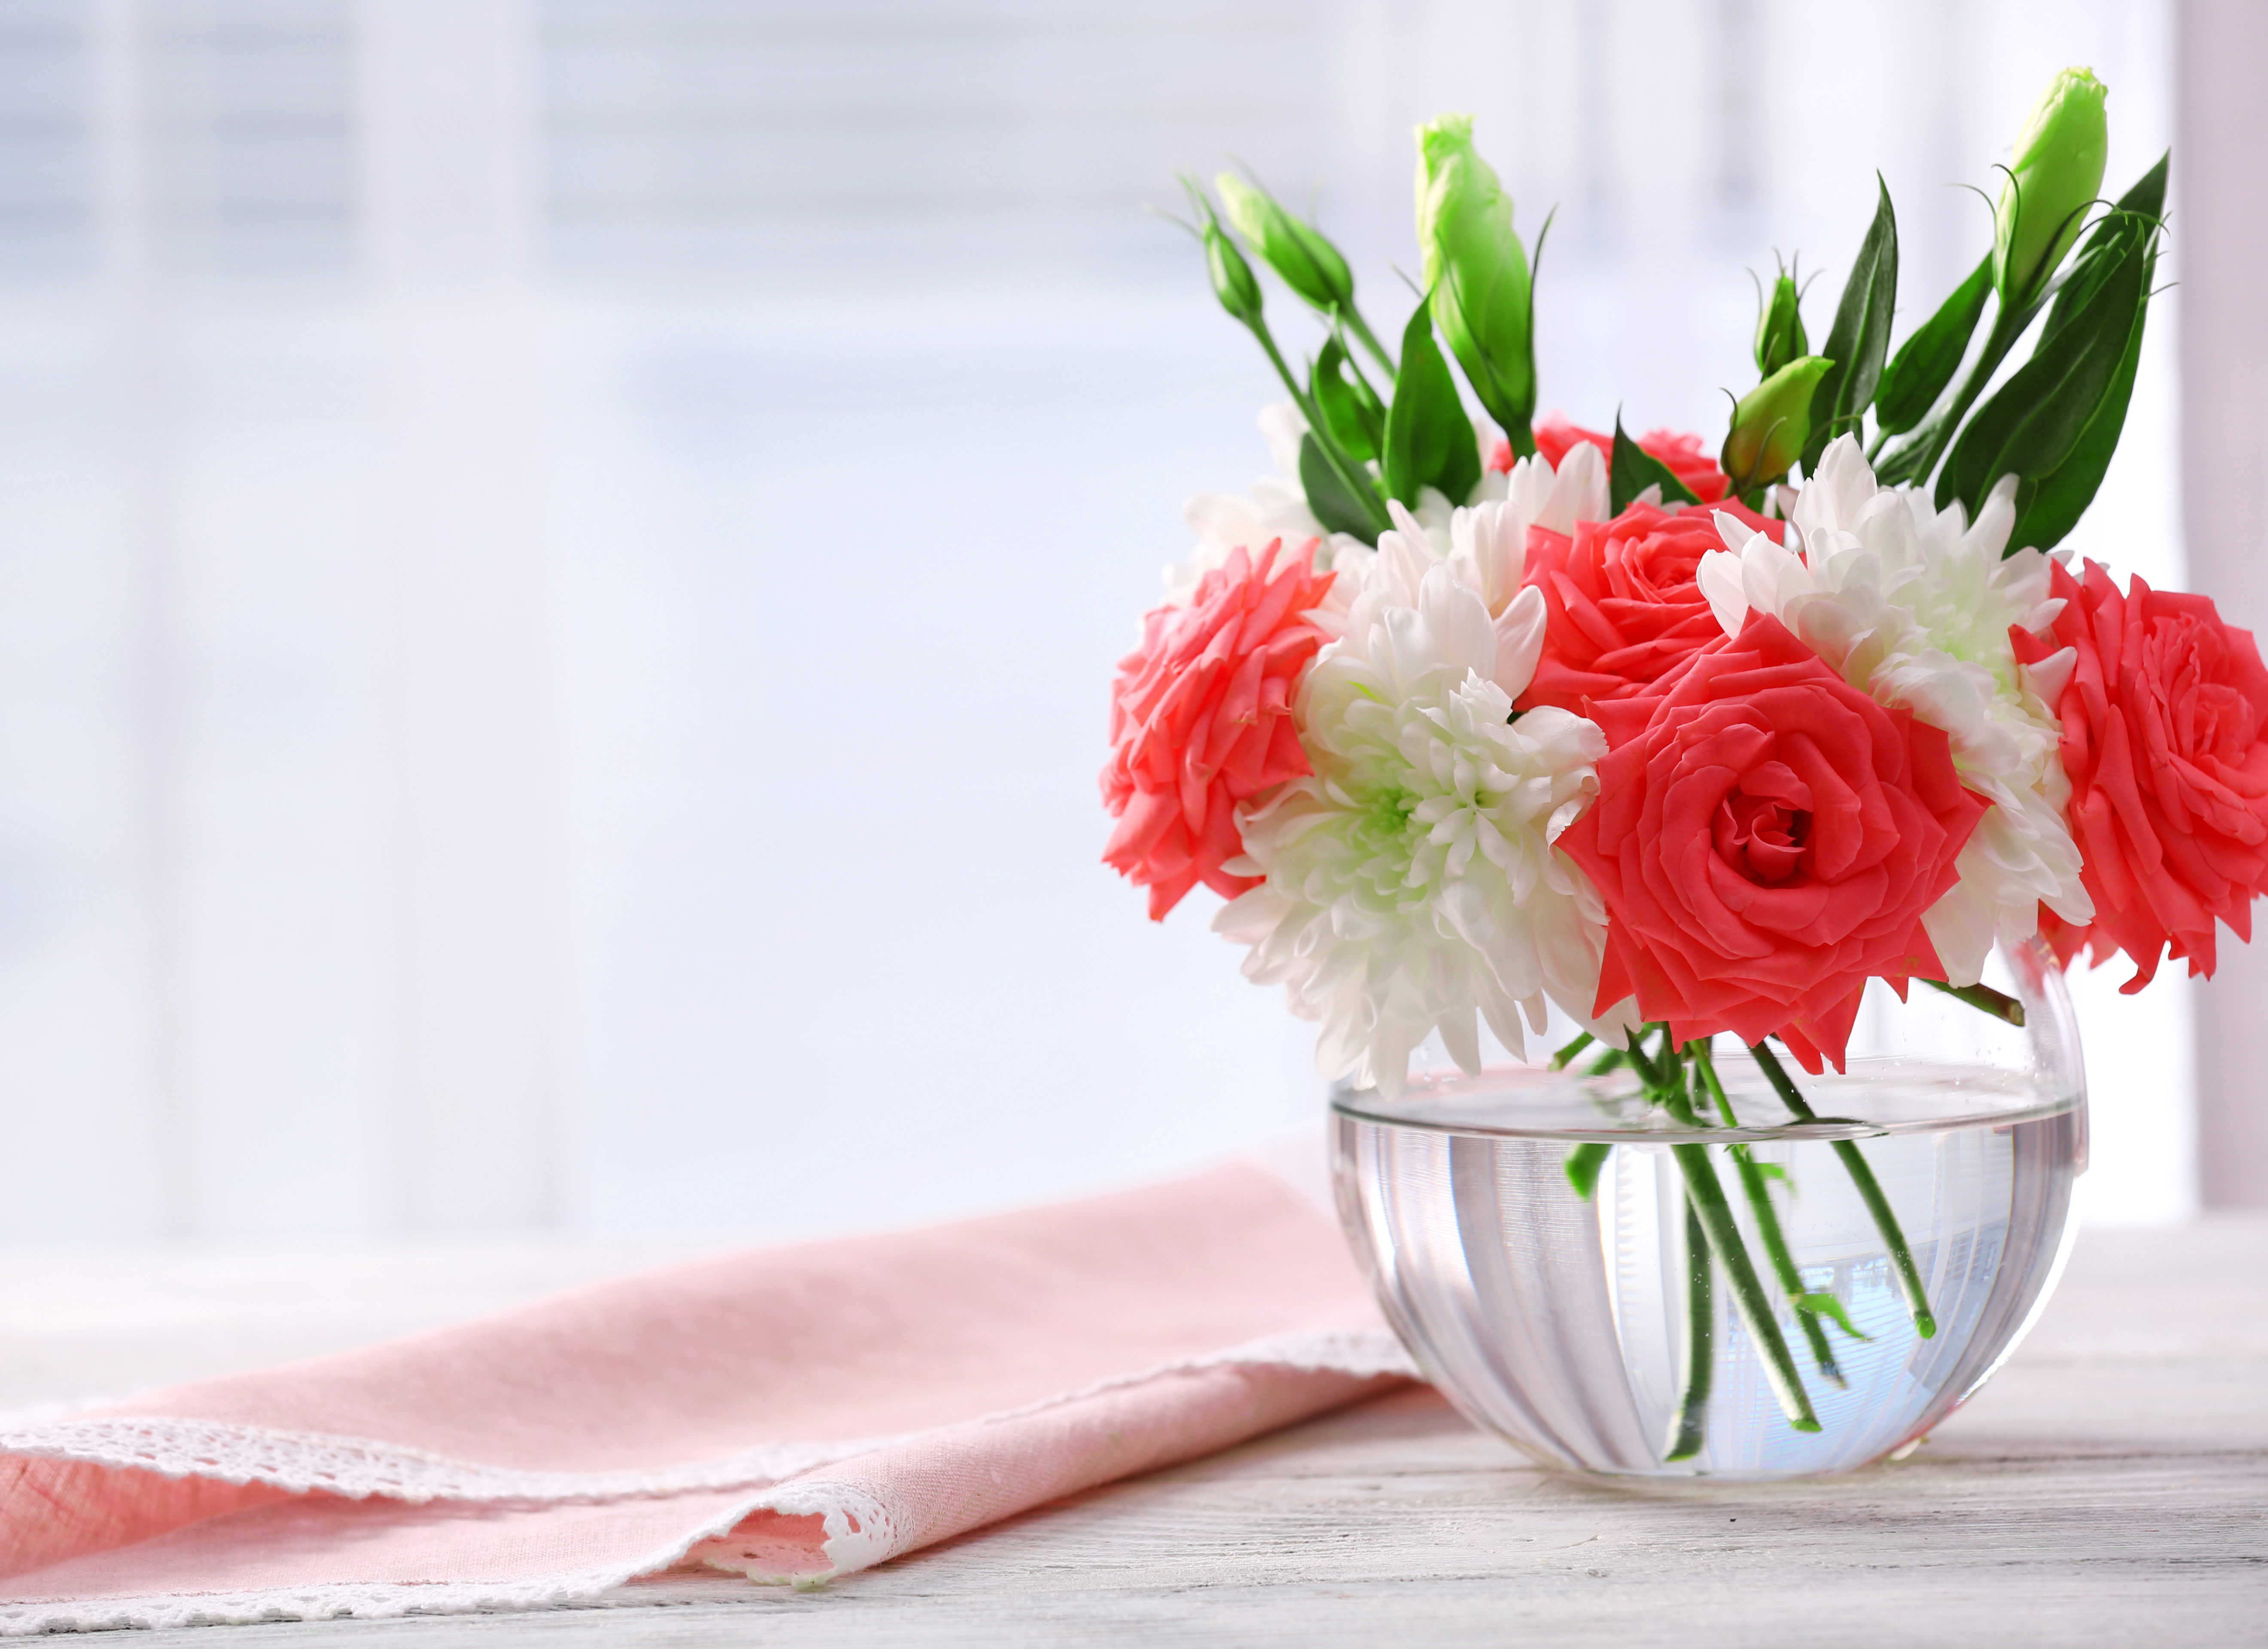 741772 descargar imagen fotografía, bodegón, eustoma, flor, pañuelo, flor roja, rosa, jarrón, flor blanca: fondos de pantalla y protectores de pantalla gratis